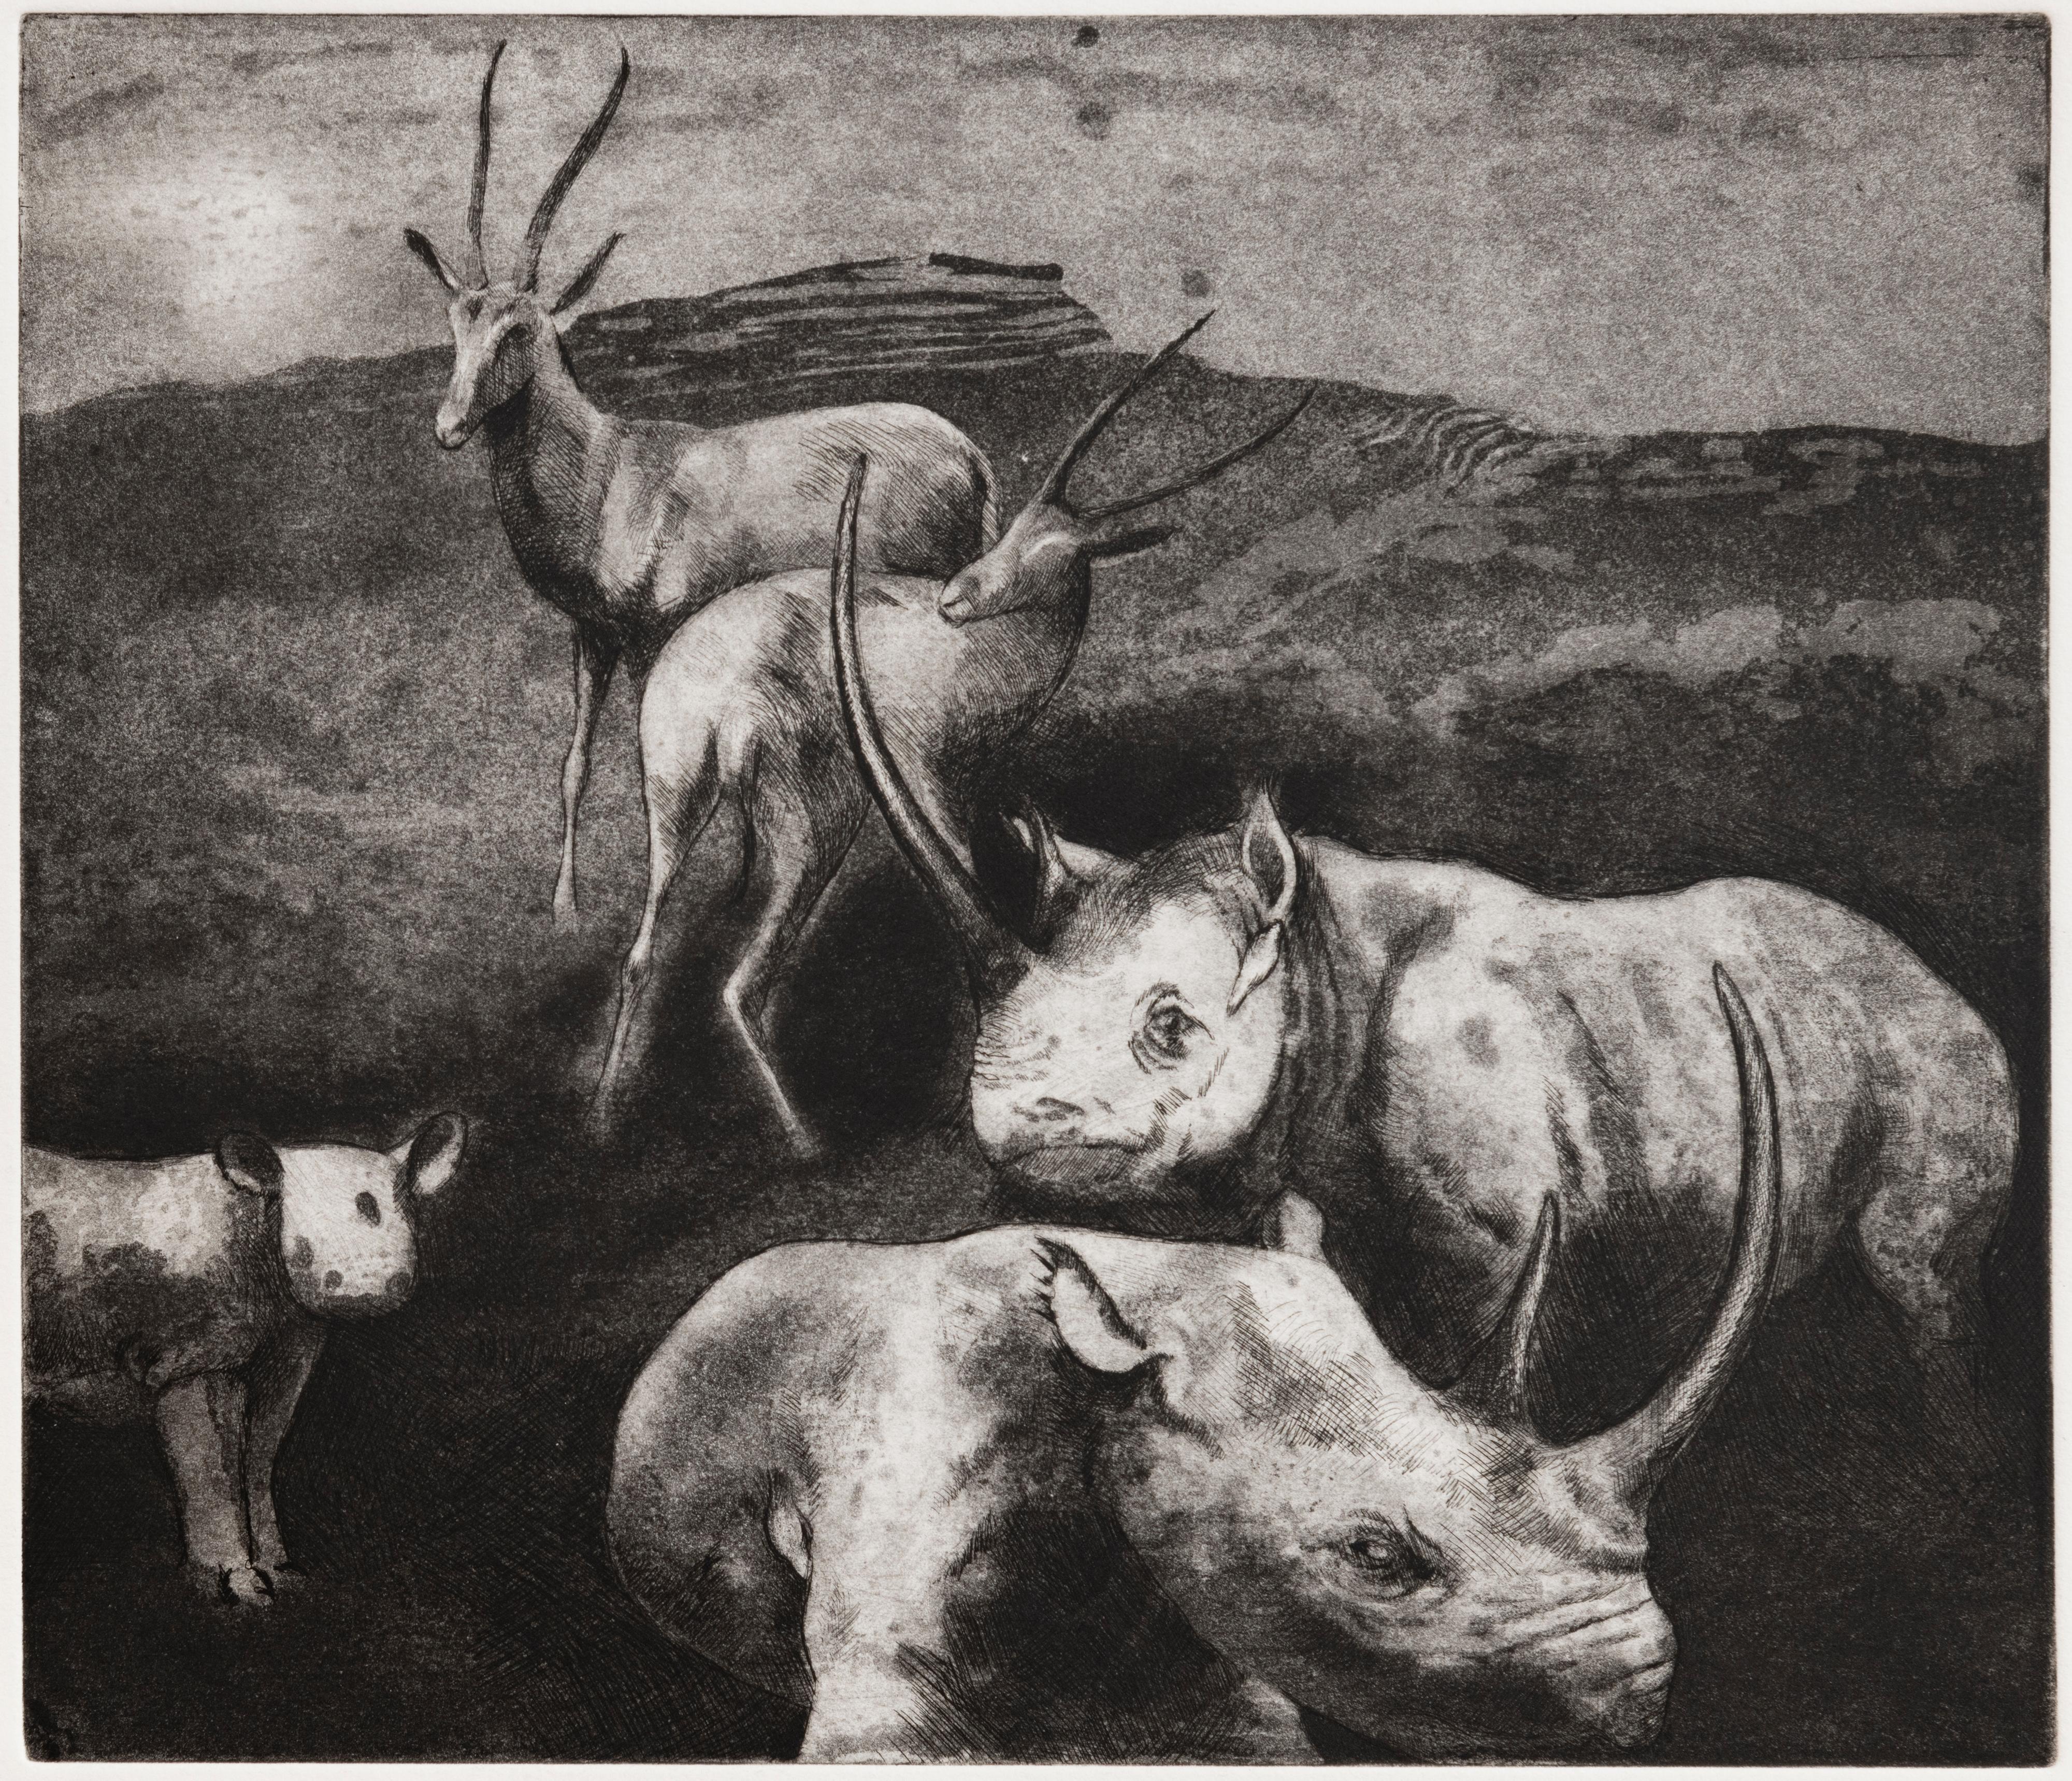 Ronald Katz Animal Print - Rhino and Antelope-A : etching with wild animals